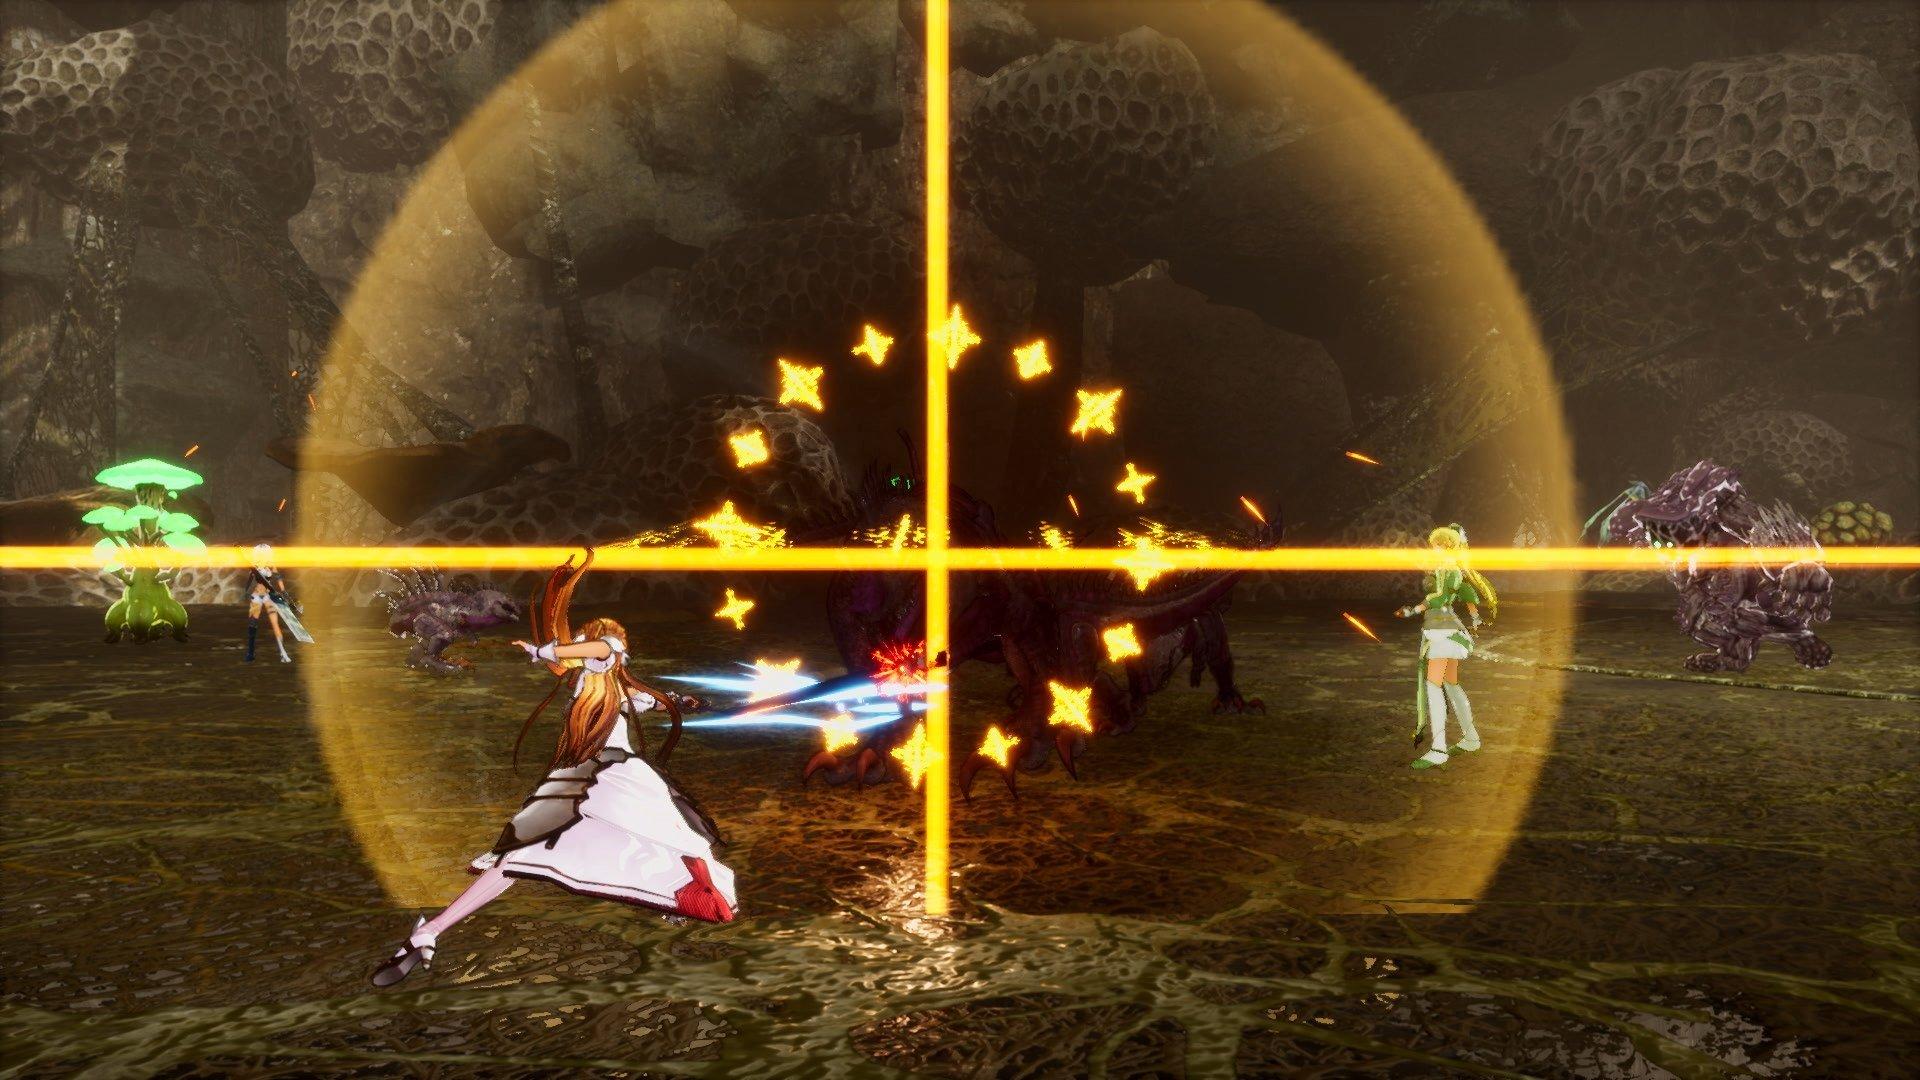 Sword Art Online: Last Recollection Box Shot for PC - GameFAQs